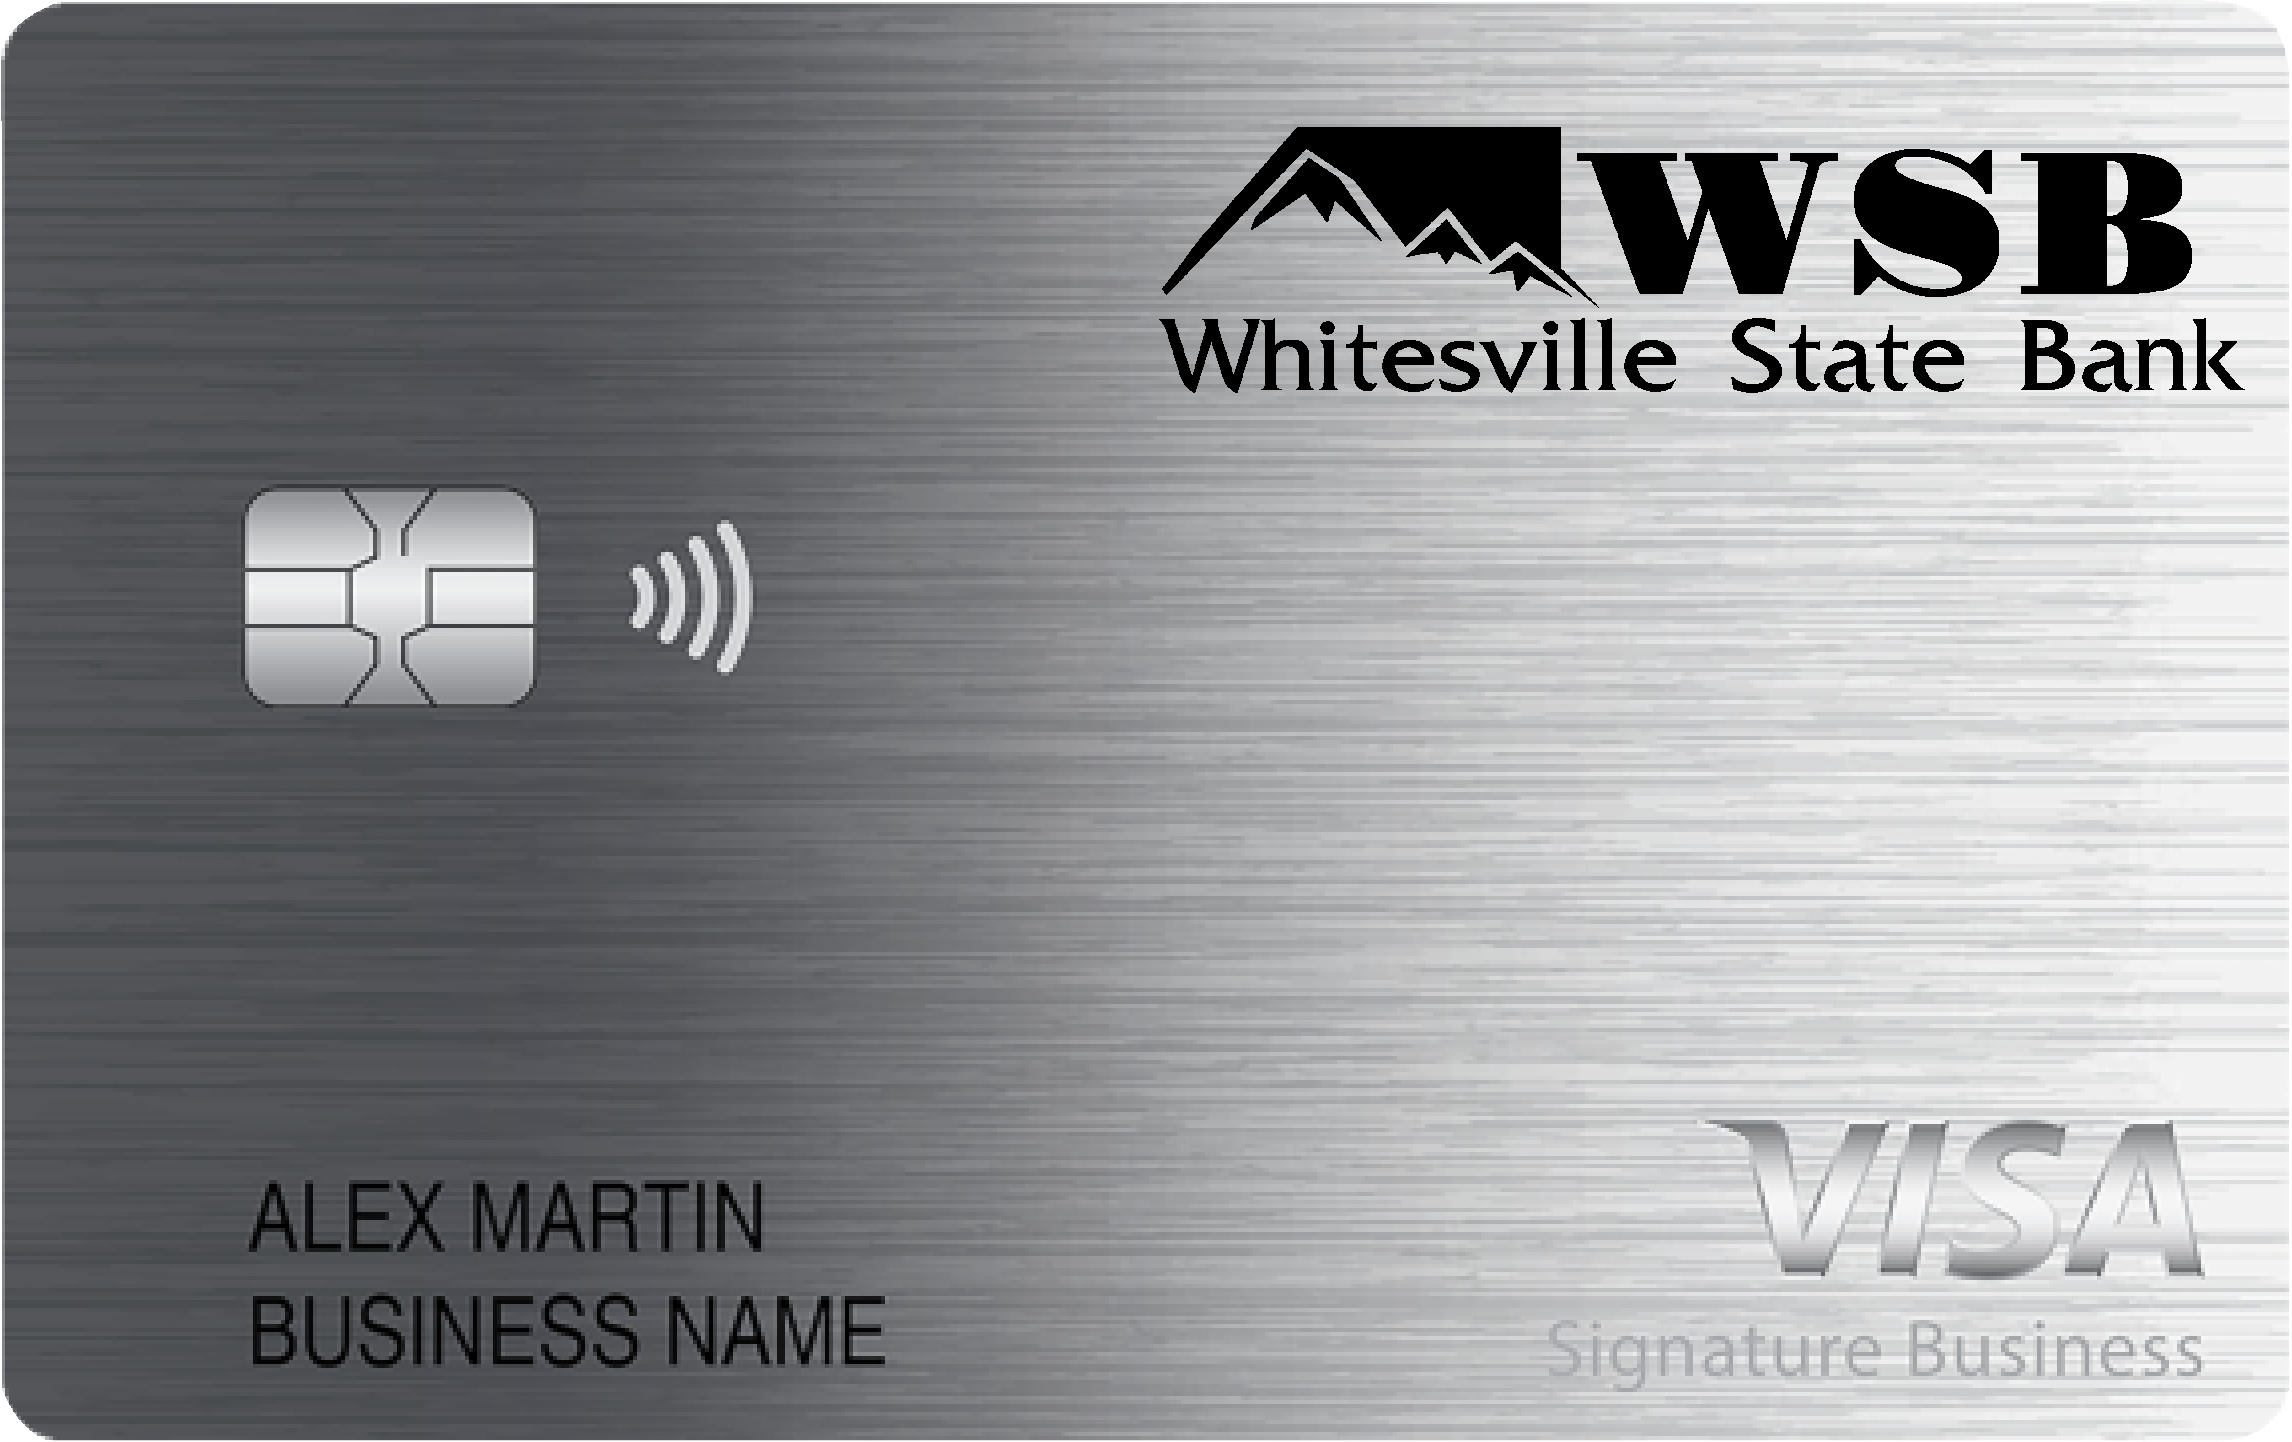 Whitesville State Bank Smart Business Rewards Card